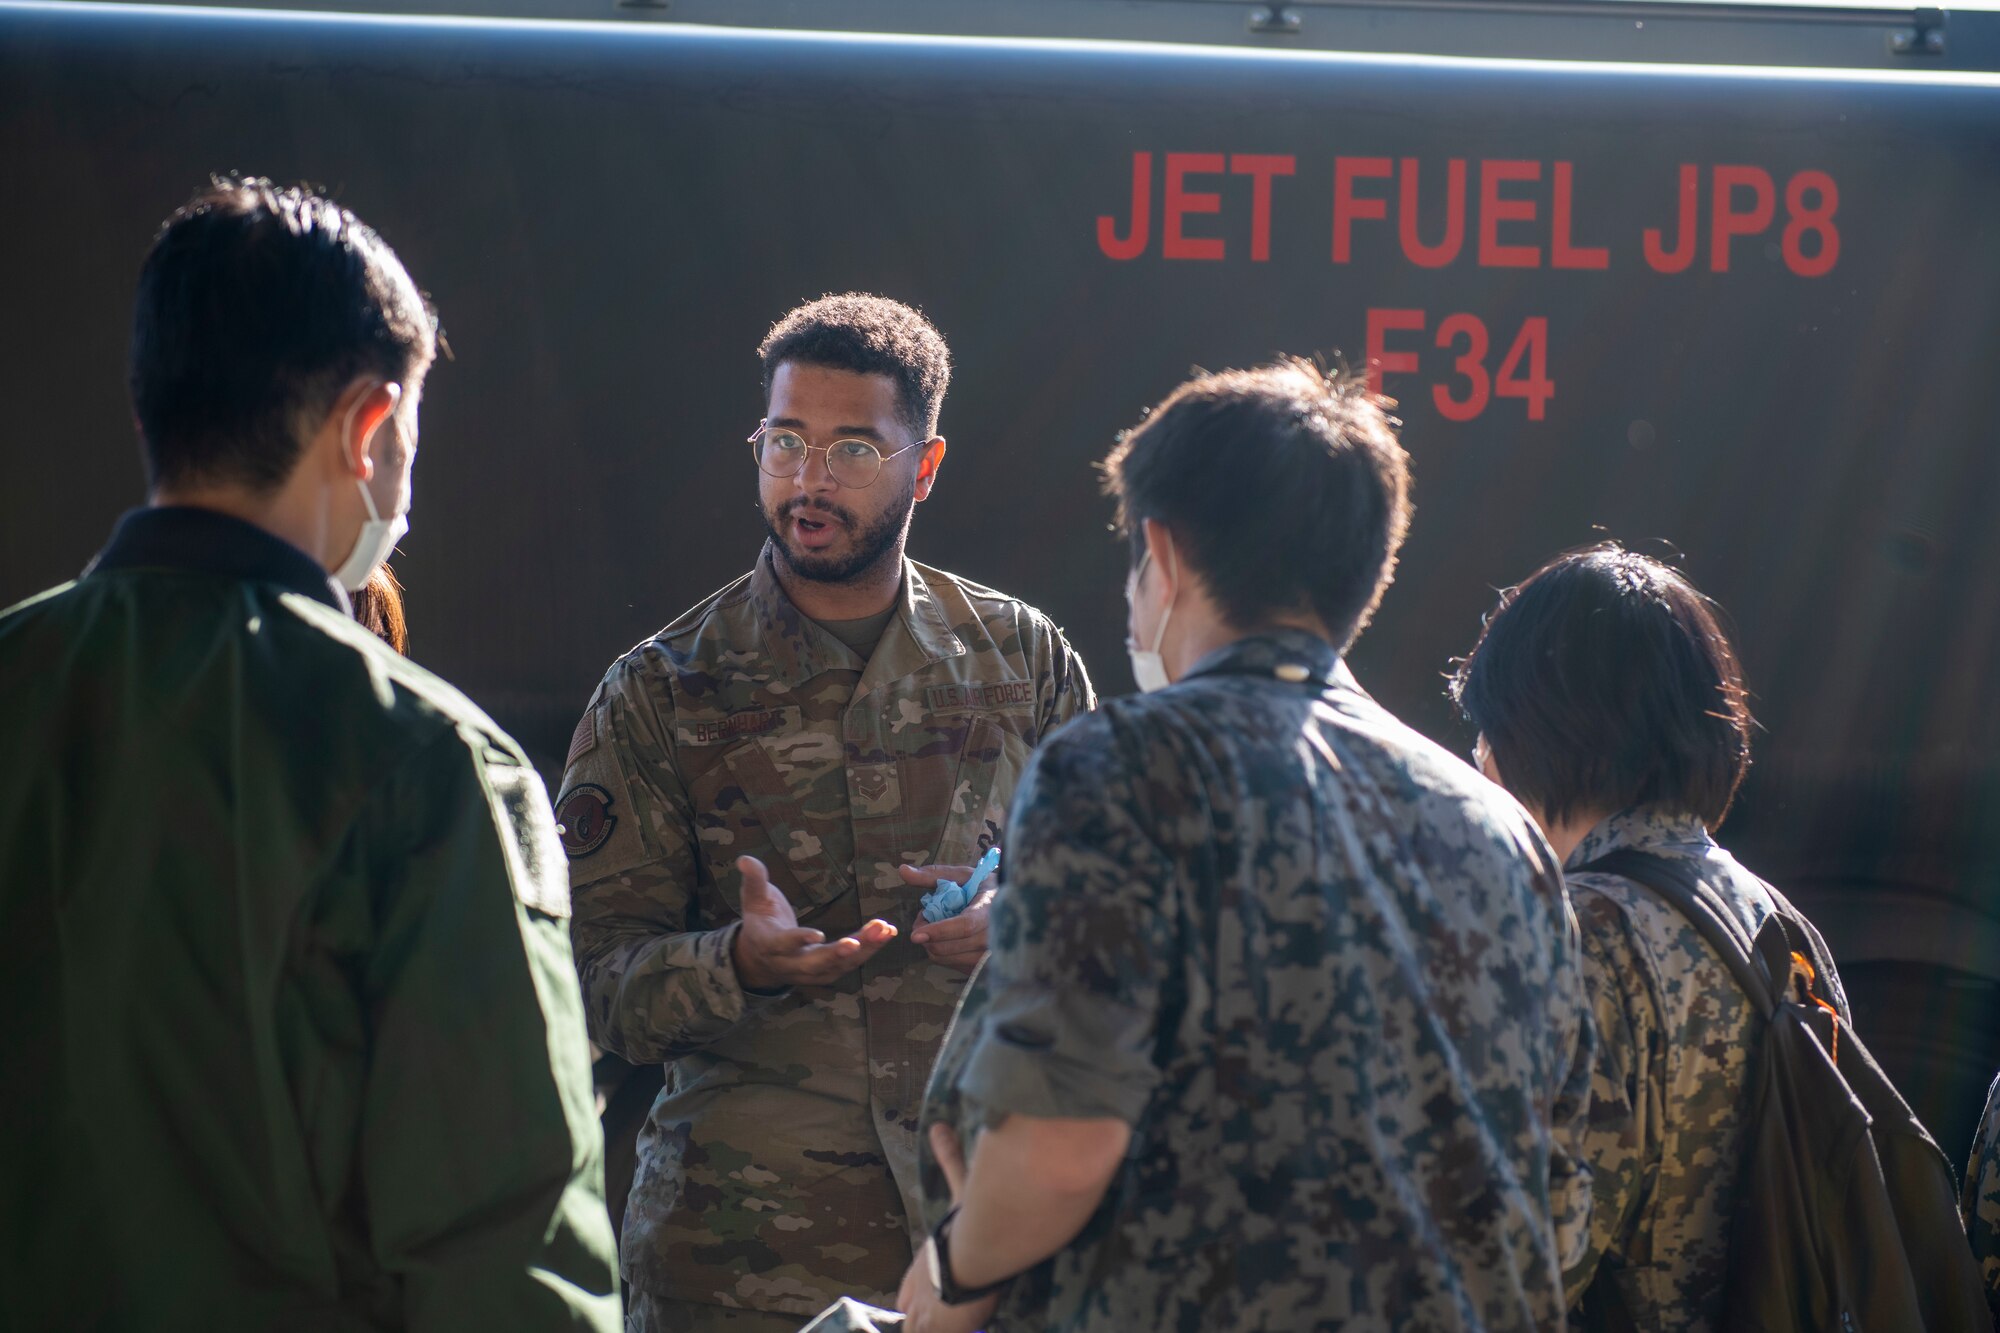 A U.S. Air Force Airman briefs members of the Japan Air Self Defense Force